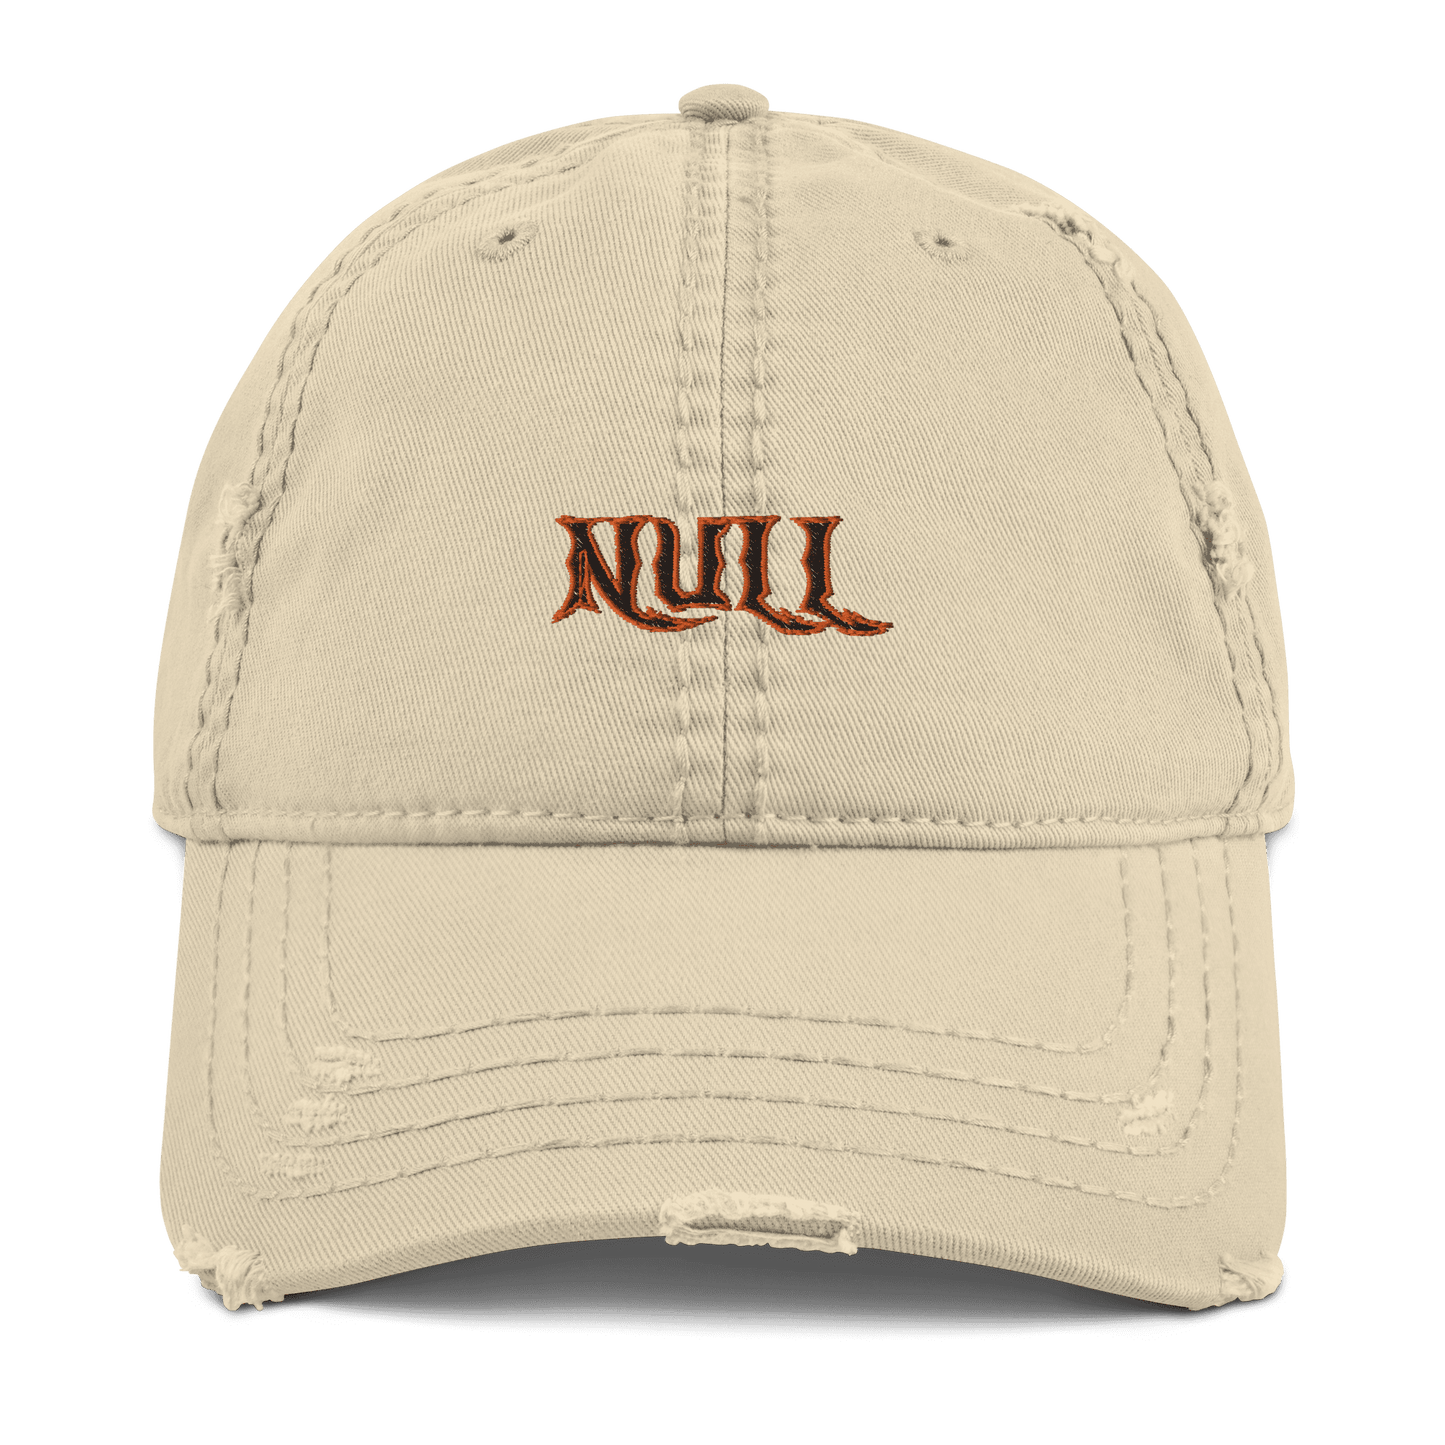 NULL hat